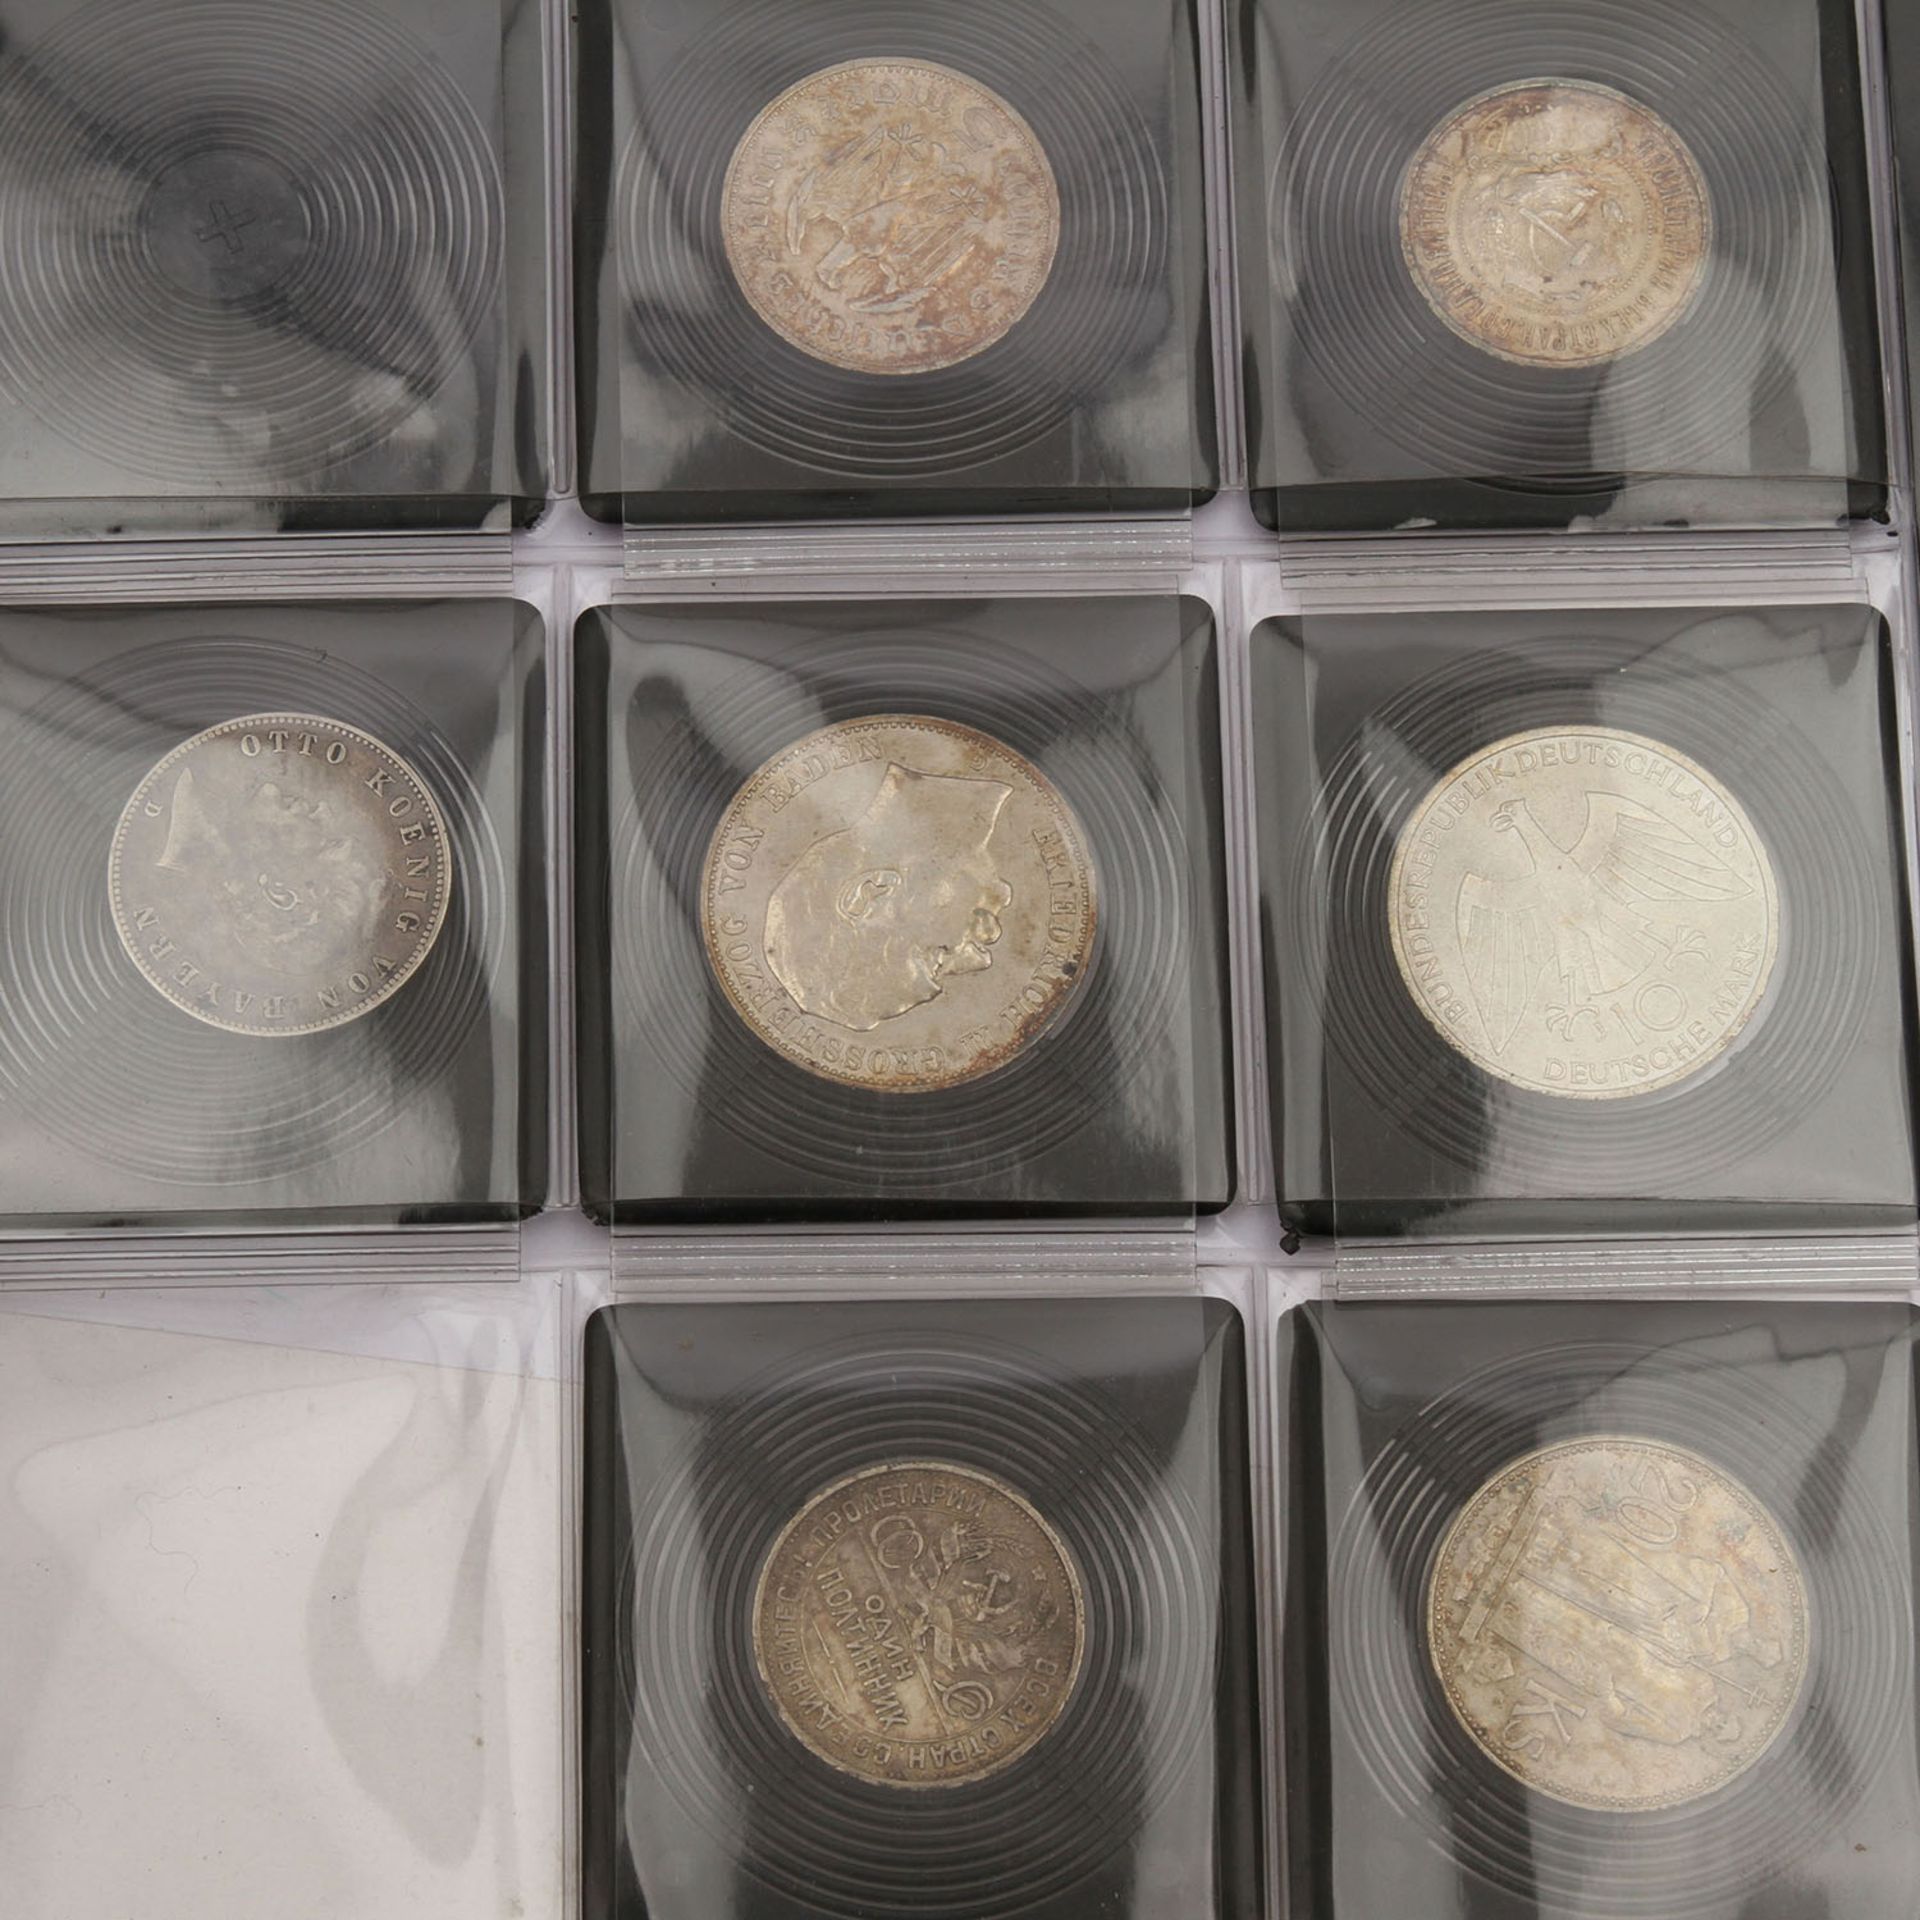 China Silber-Gedenkmünzen inSpezialschatulle. 13 Stück mit u.a. 10 Yuan 1992 zu 1 Unze Silber - Bild 4 aus 4